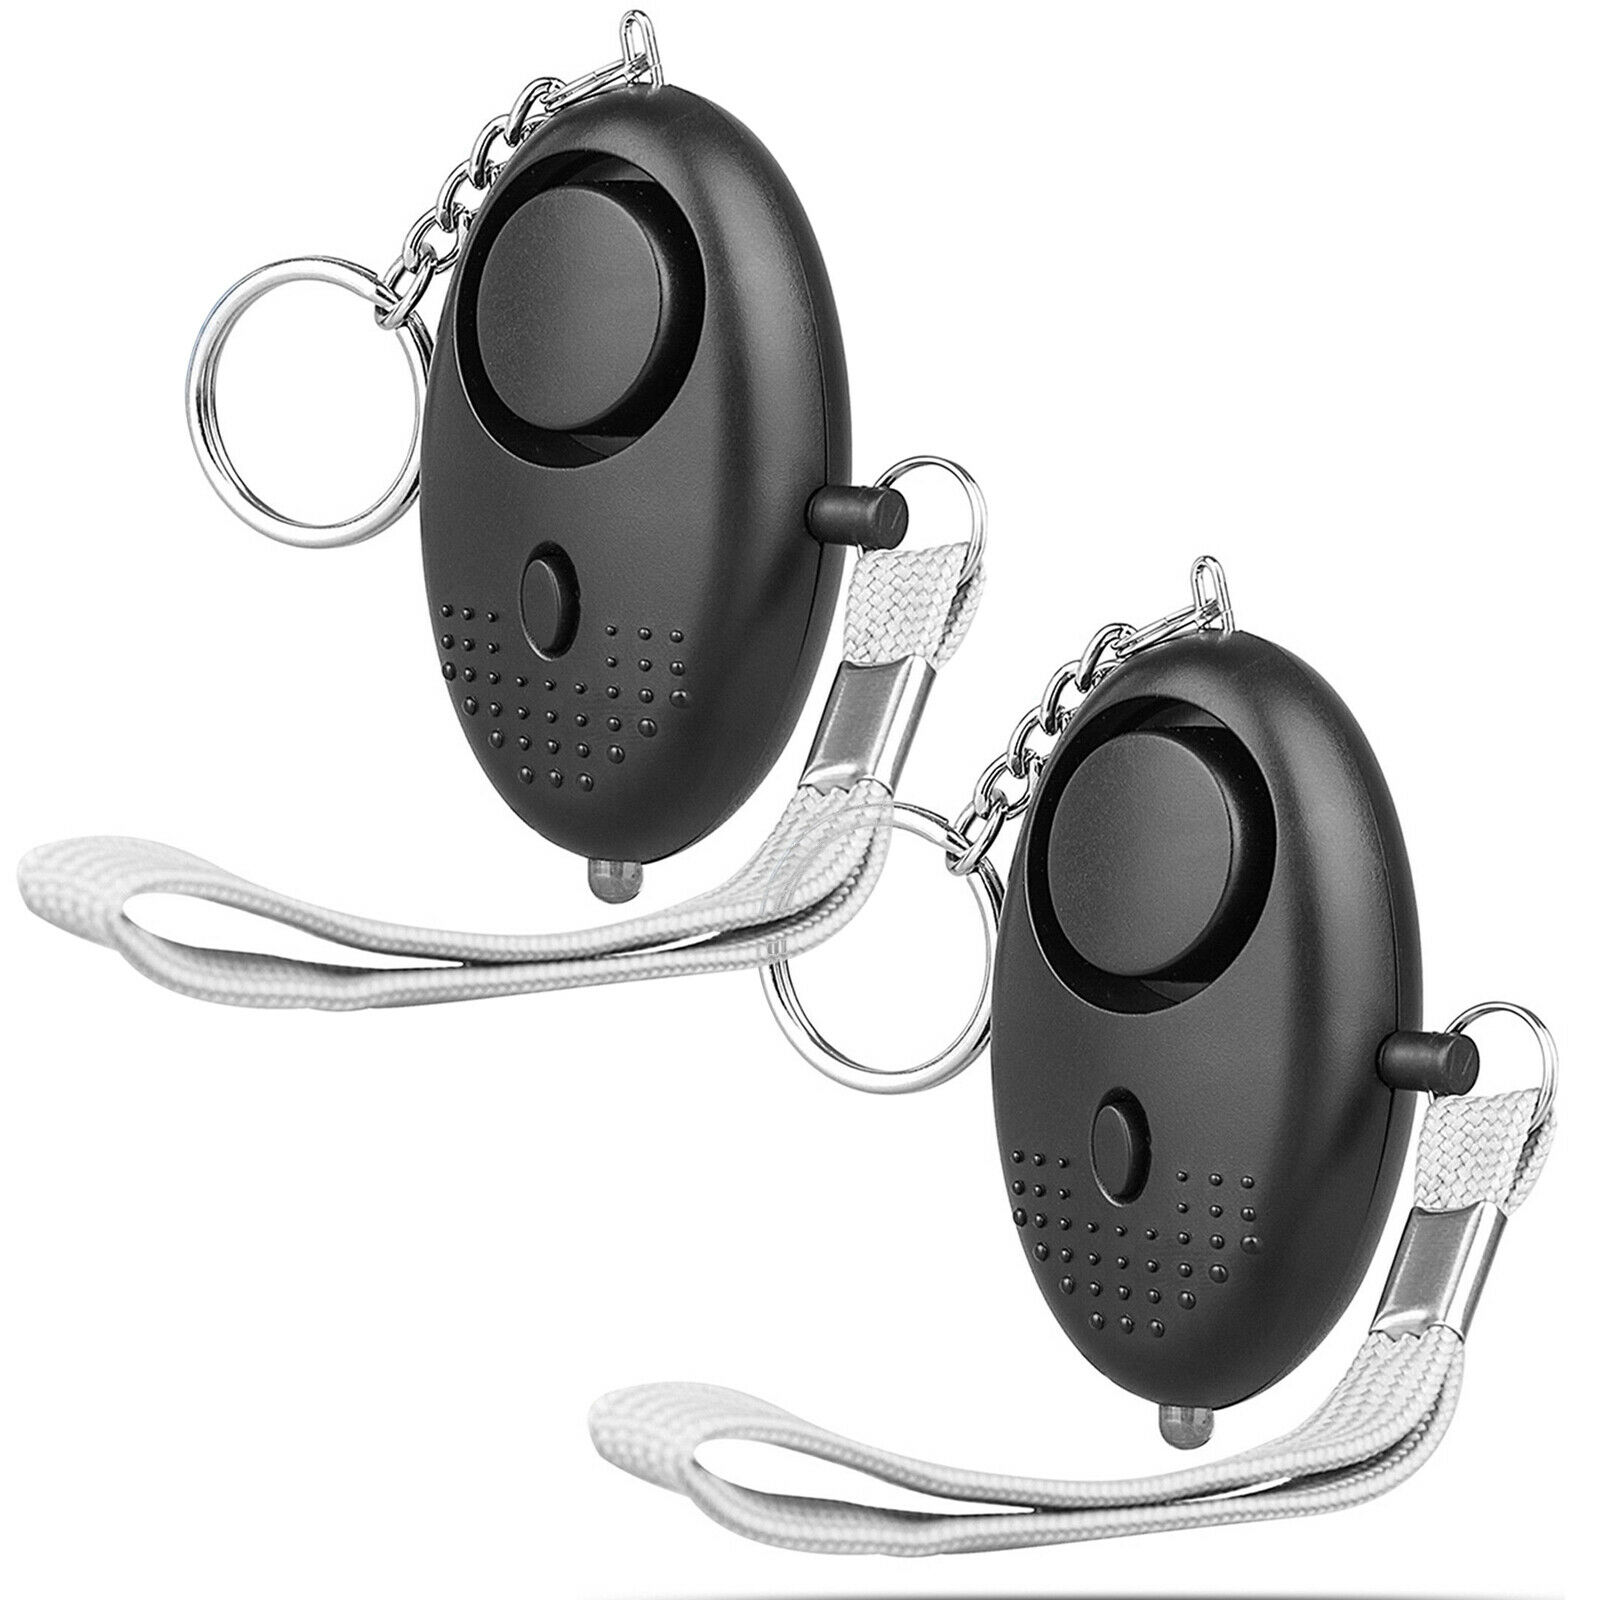 35pcs Personal Safe Alarm Sound Keychain 140db Emergency Women Safety Led Light Ebay 5790